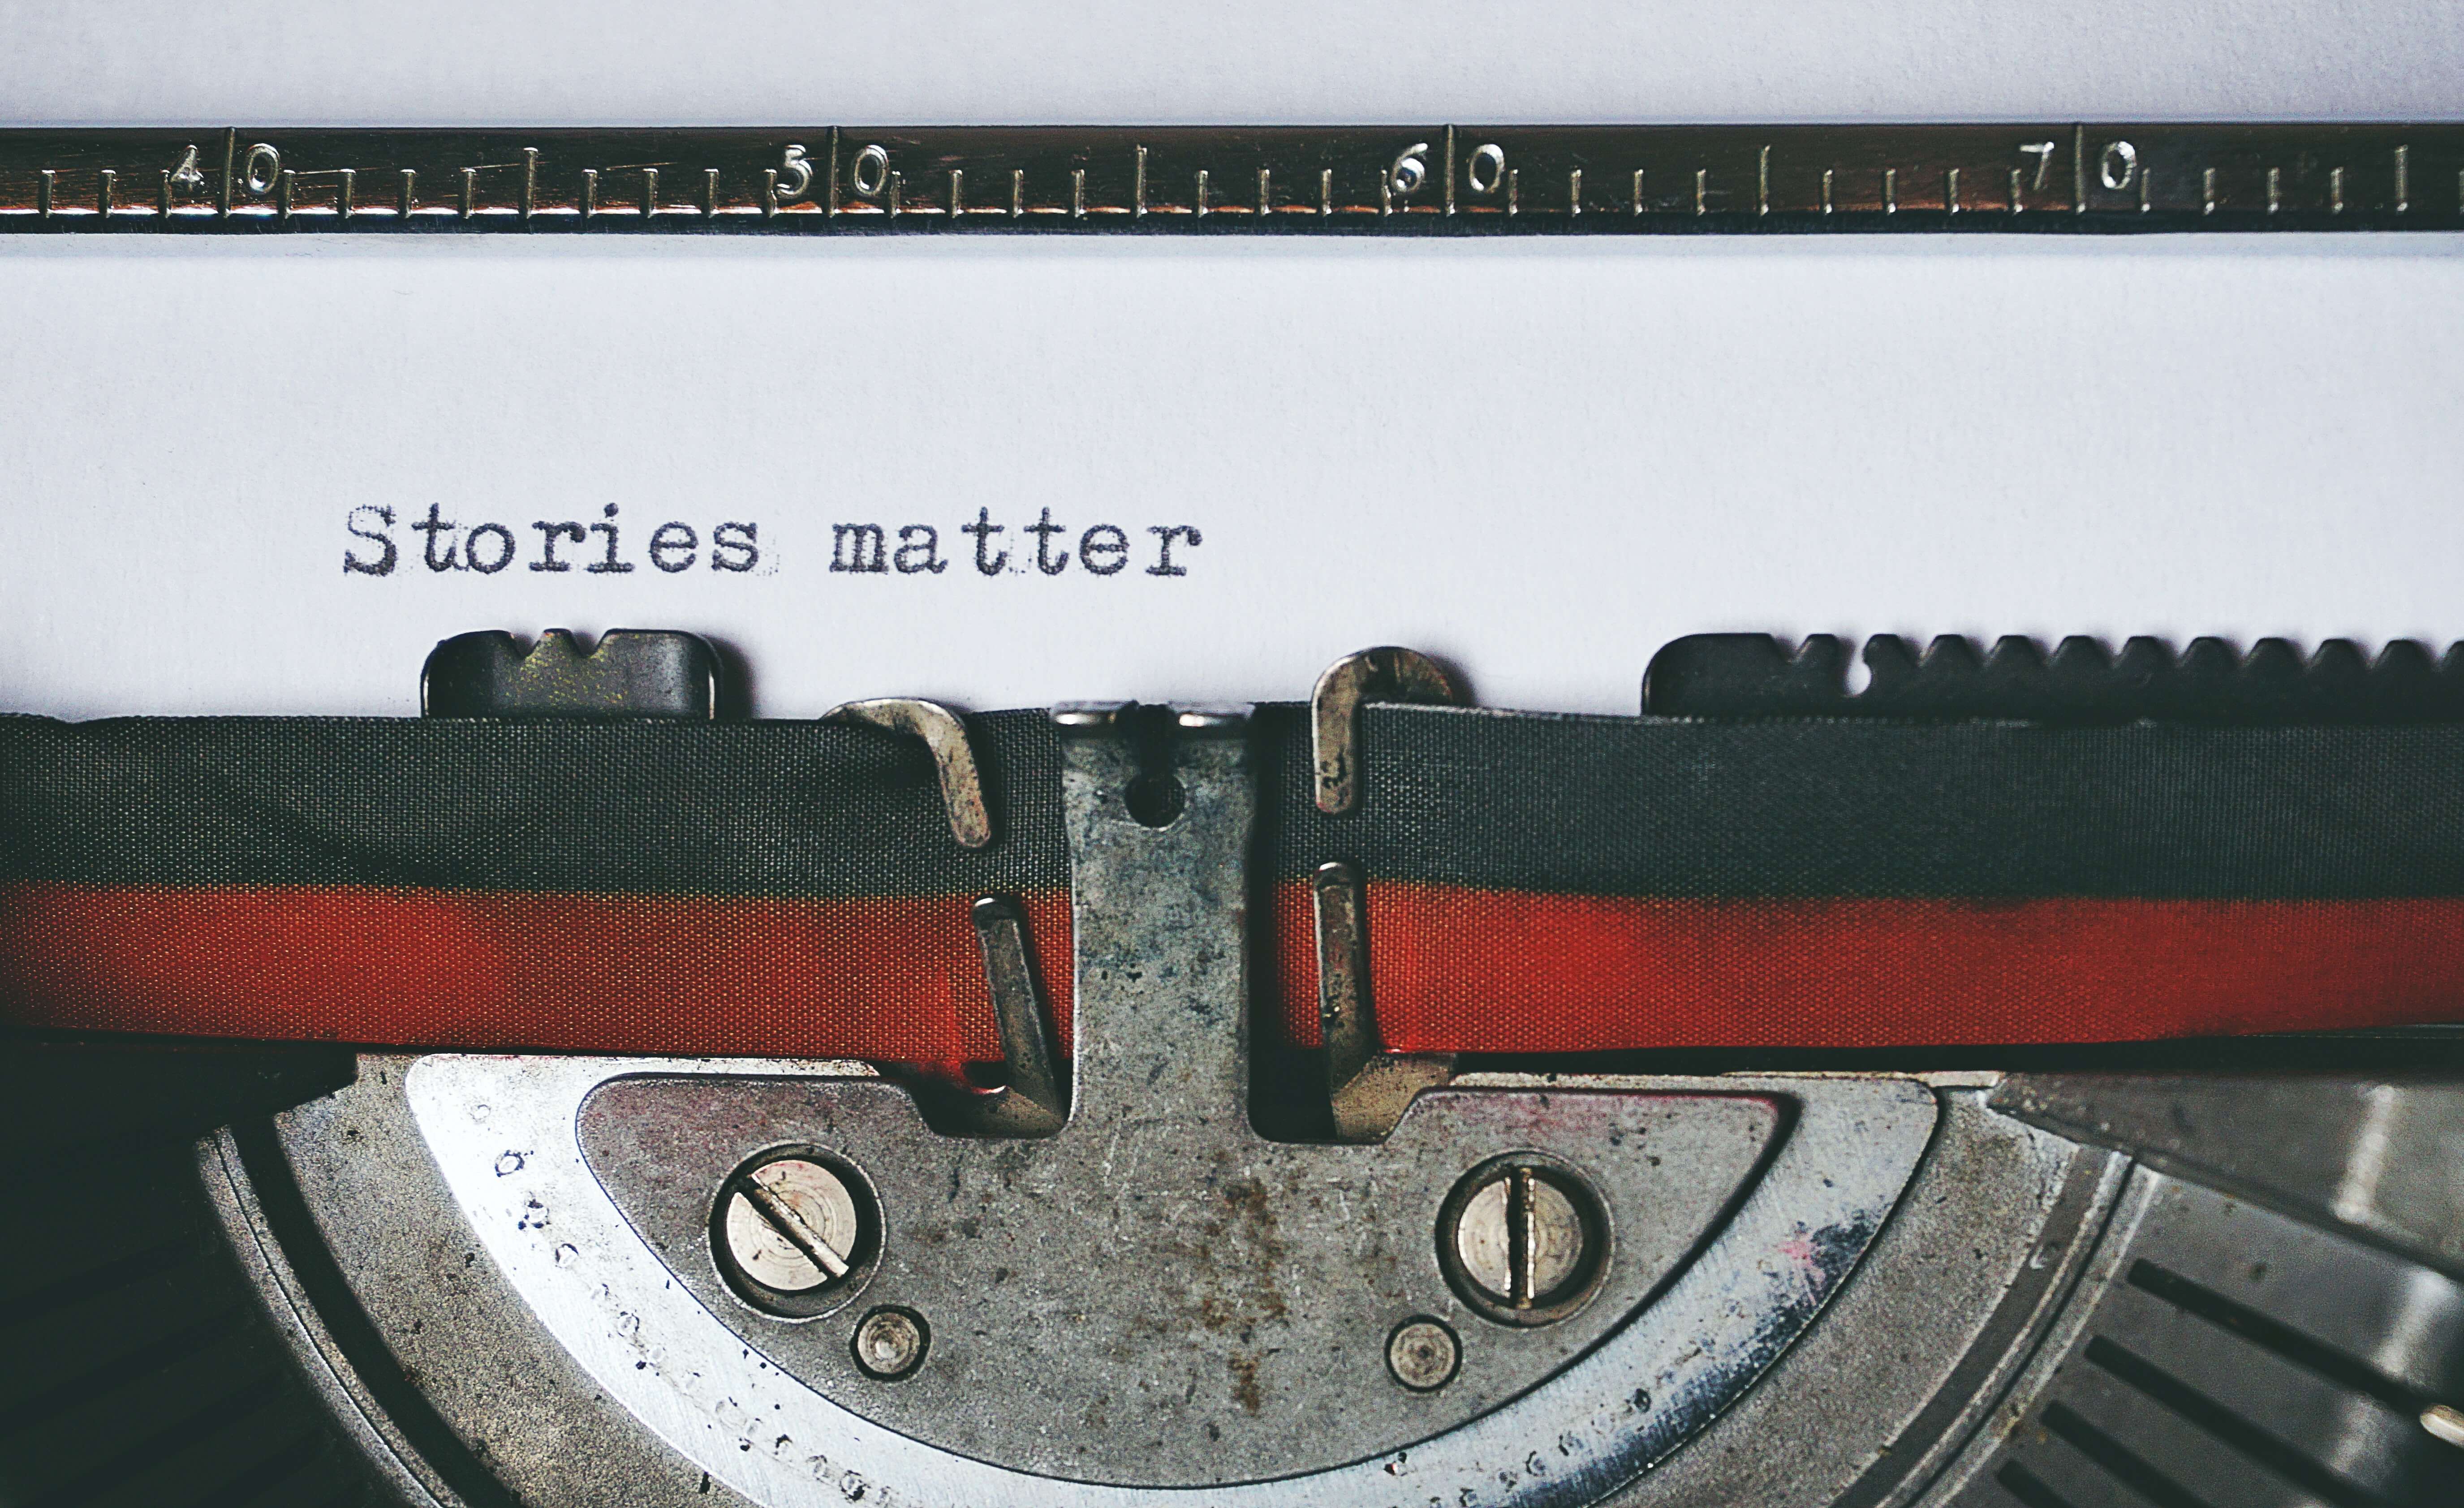 Ouderwetse typmachine typt de tekst stories matter